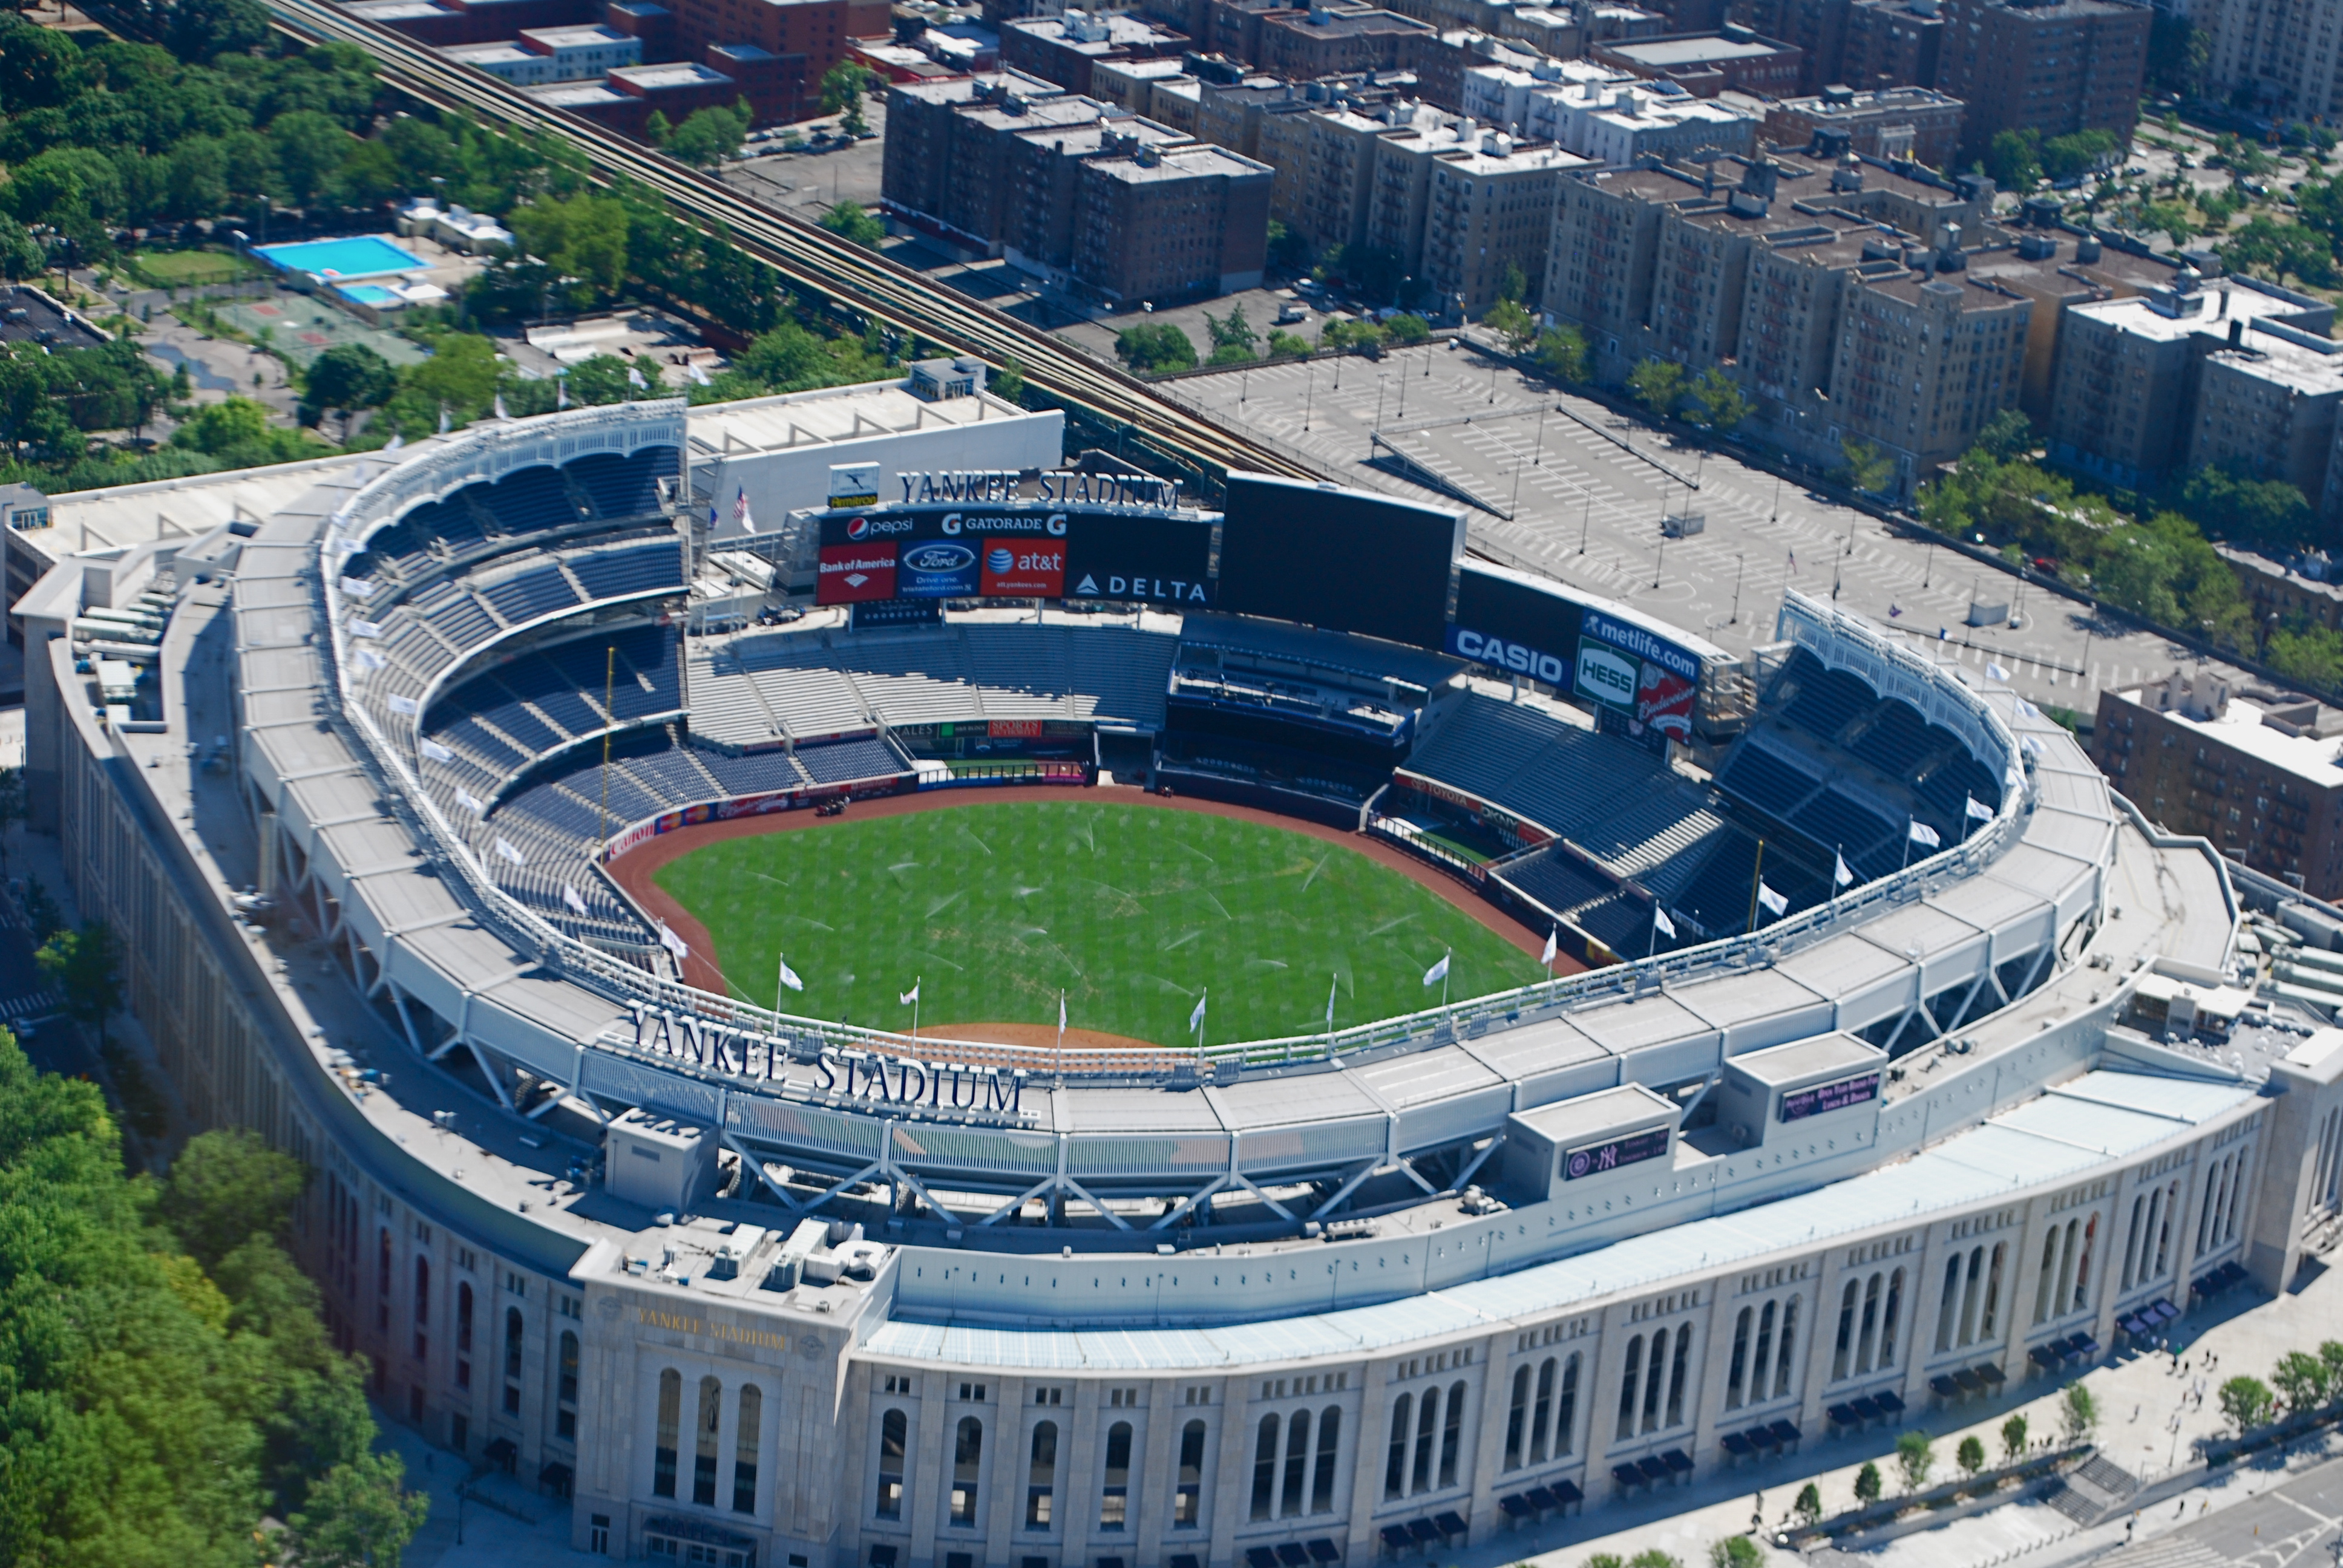 The new Yankee Stadium opened in 2009 next door to the original.